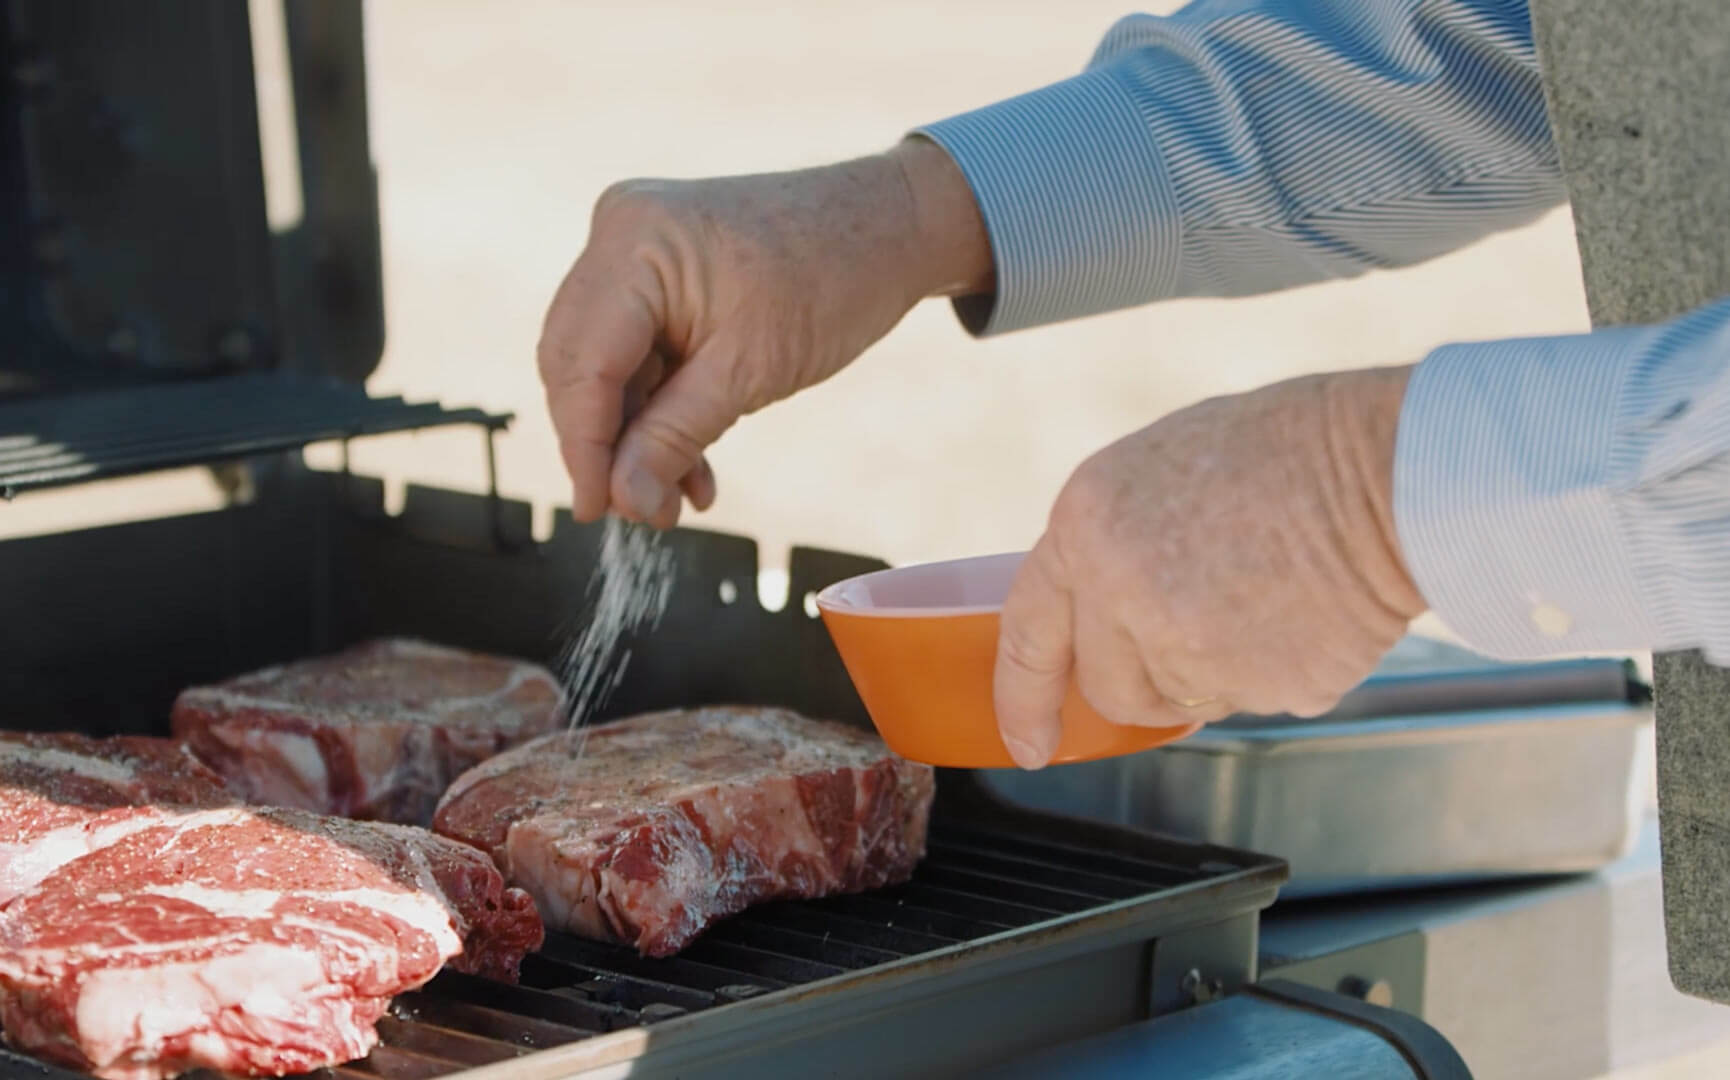 Hands sprinkling salt onto steaks on an outdoor grill.